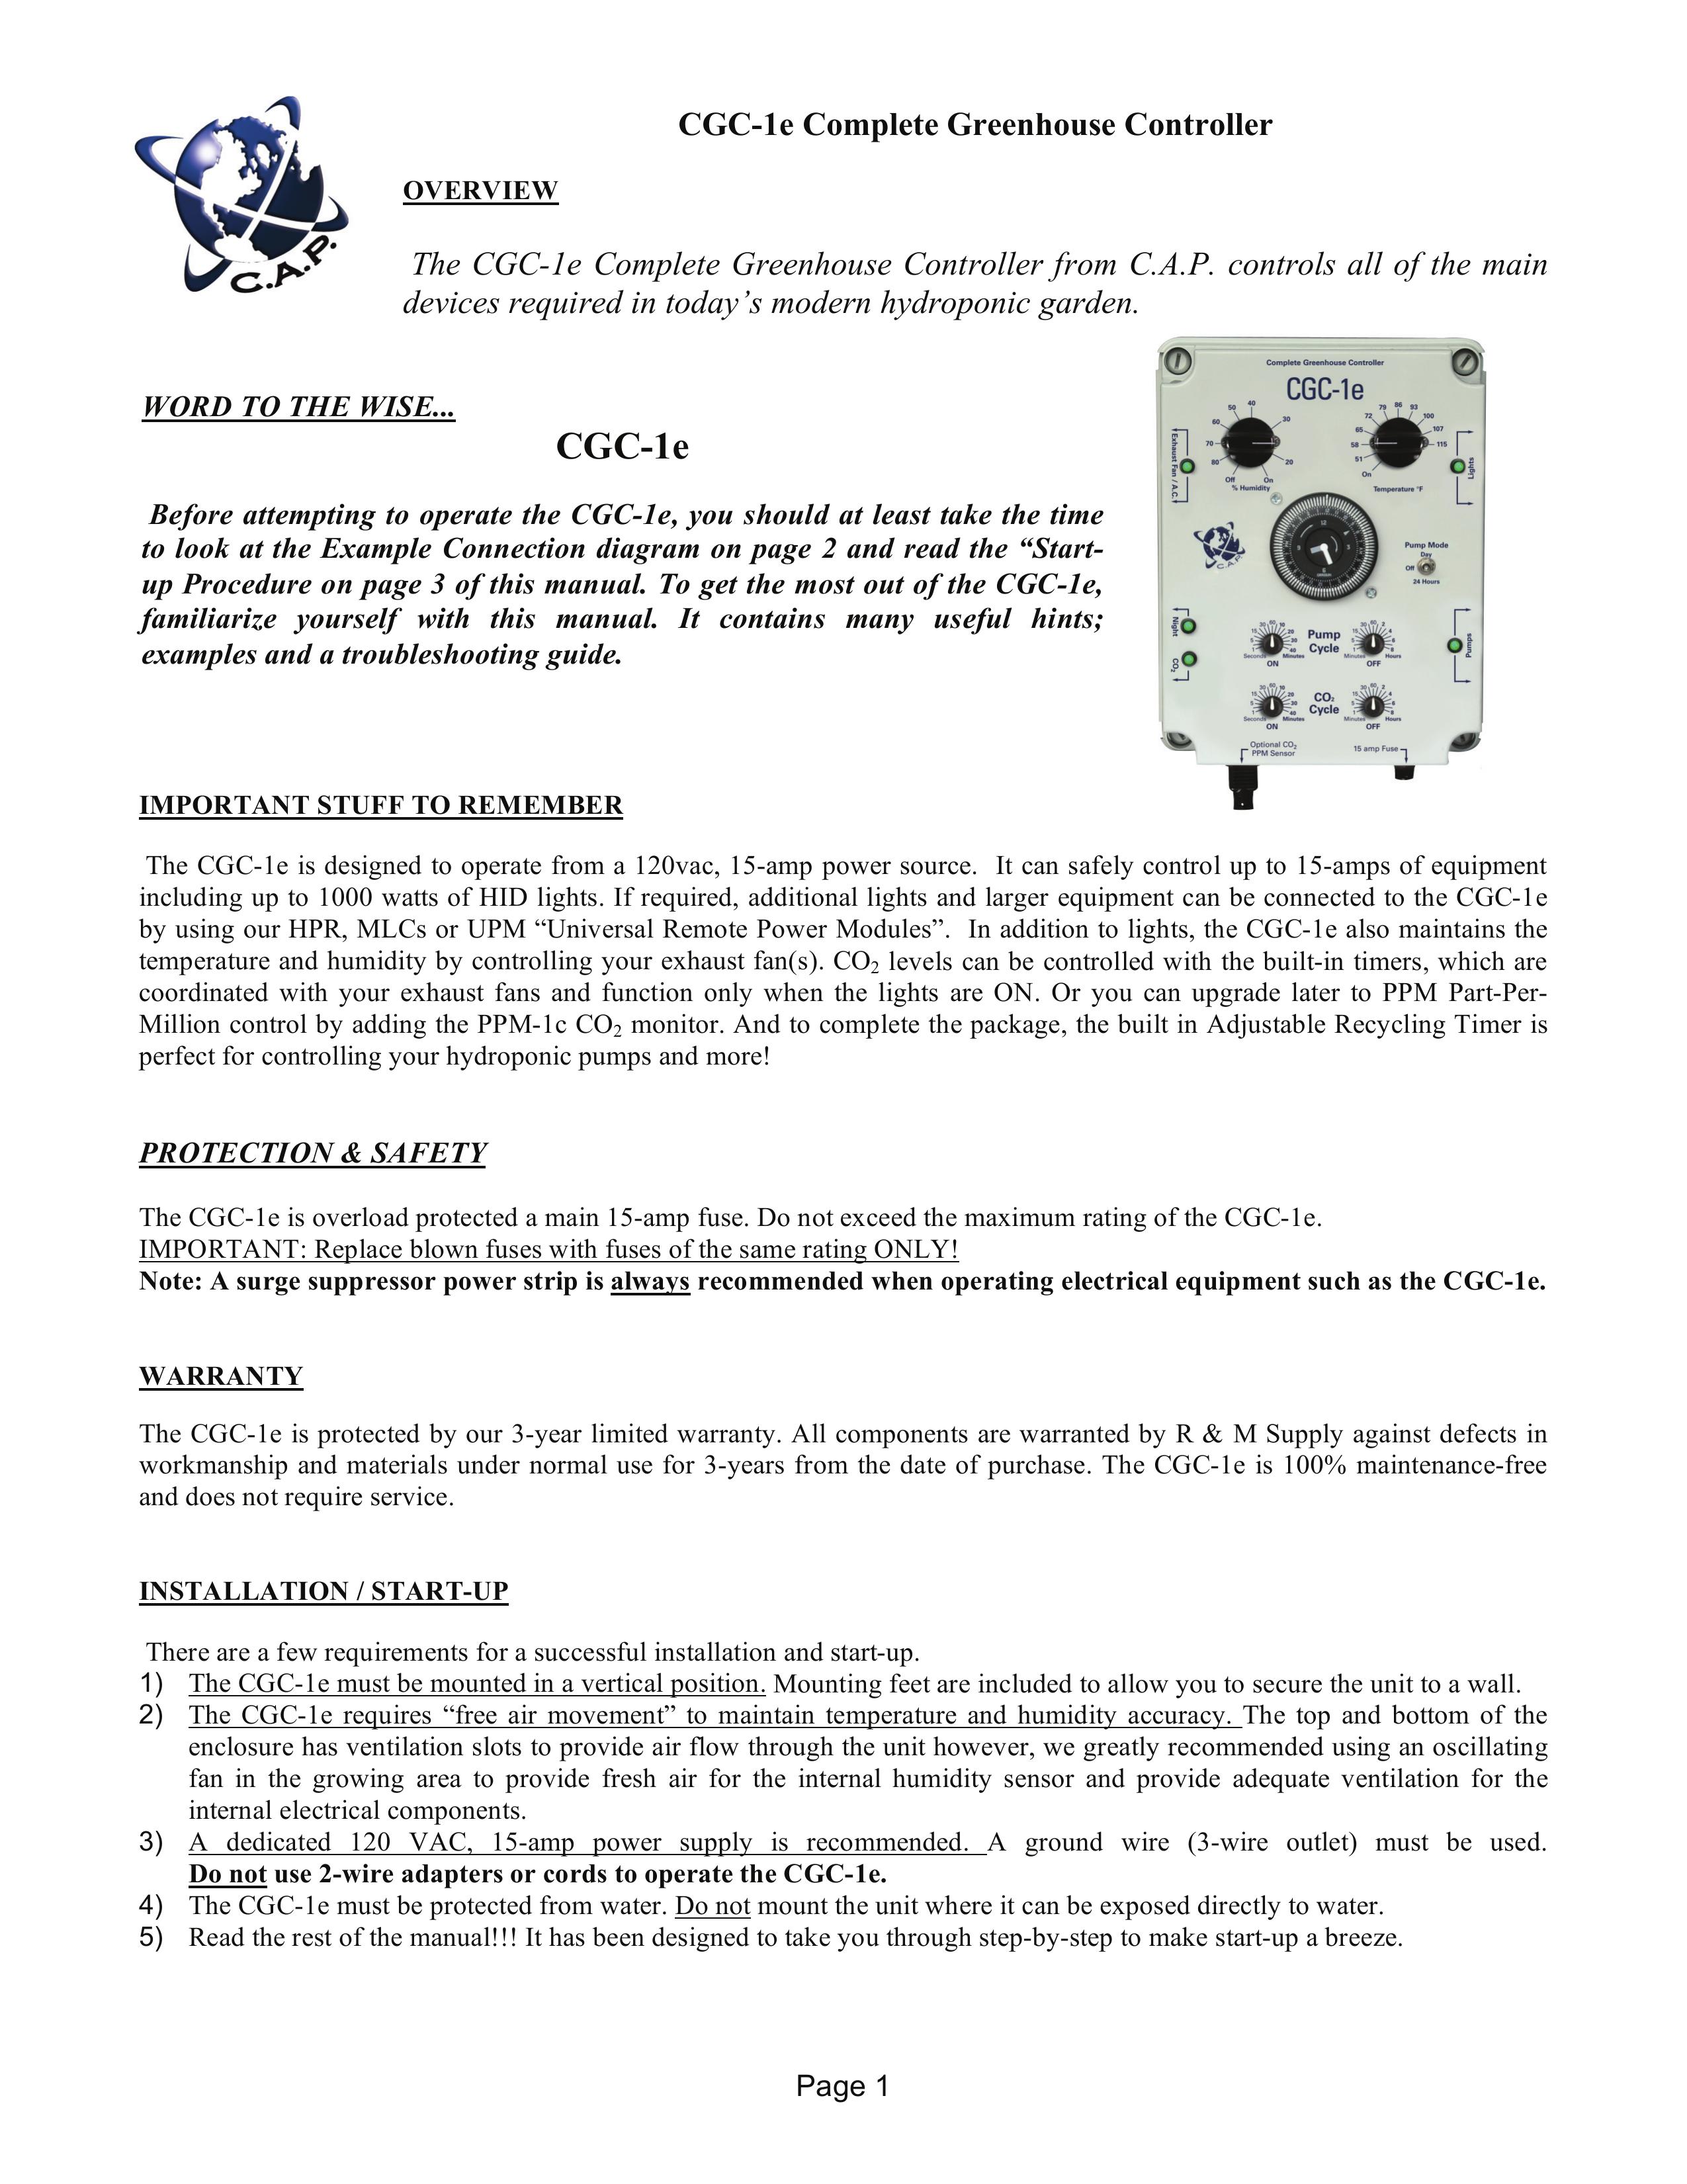 R & M Int'l. CGC-1e Greenhouse Kit User Manual